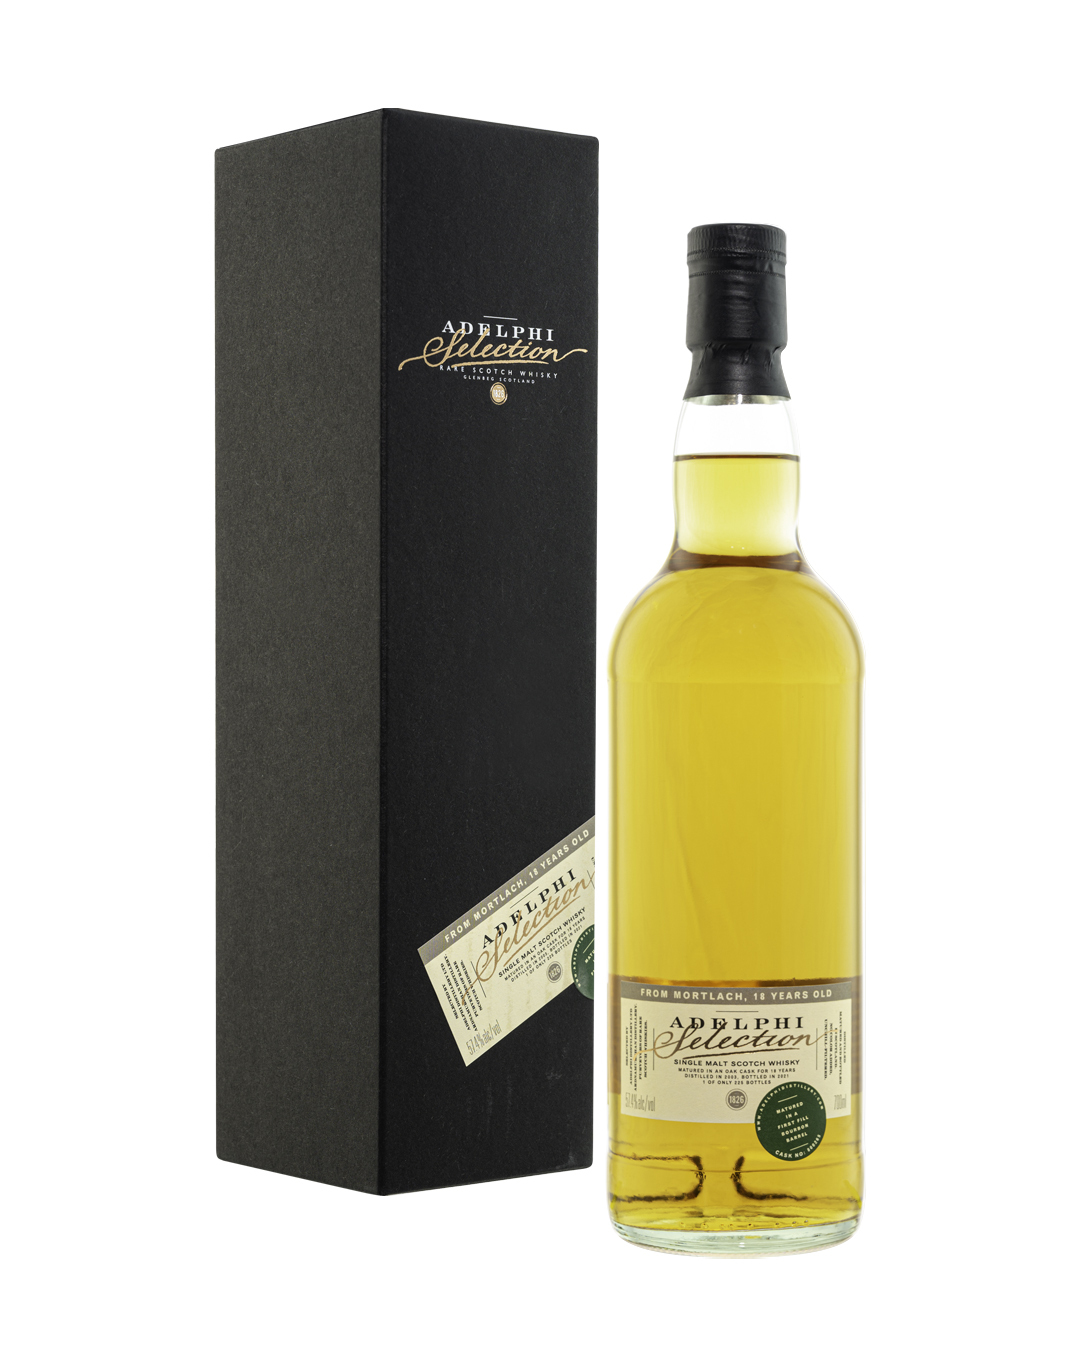 Glenmorangie 18 Years Old | Highland Single Malt Scotch Whisky NV / 750 ml.